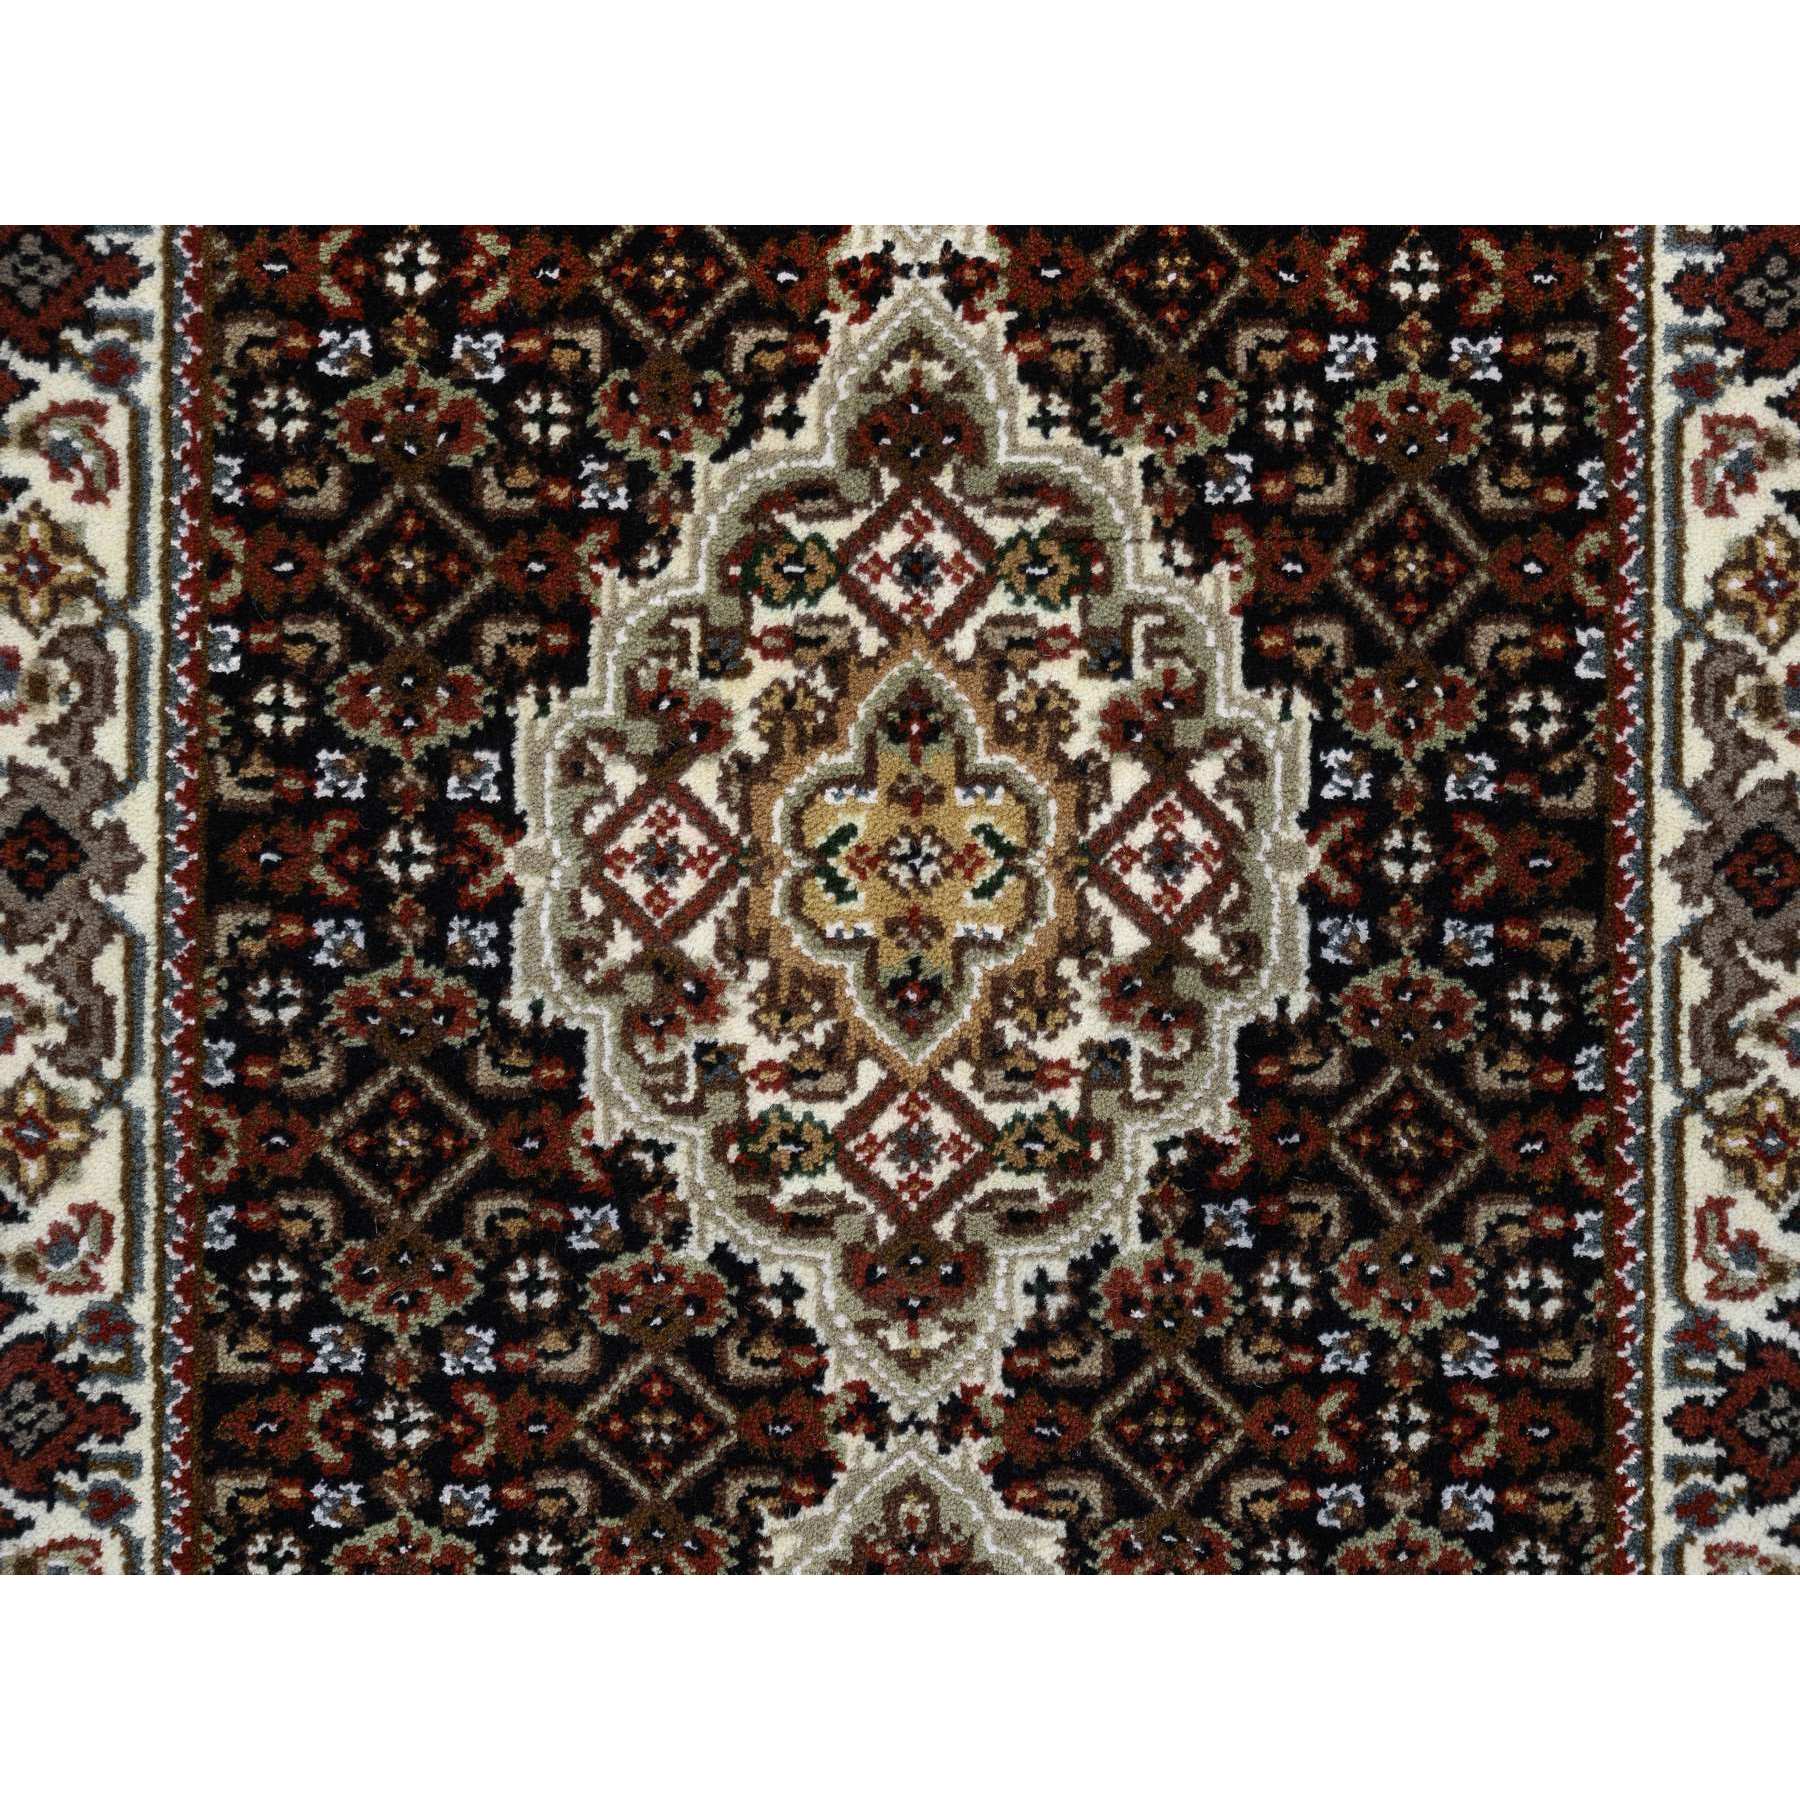 2'x7'10" Rich Black, Tabriz Mahi with Fish Medallion Design, 175 KPSI, 100% Wool, Hand Woven, Runner Oriental Rug 